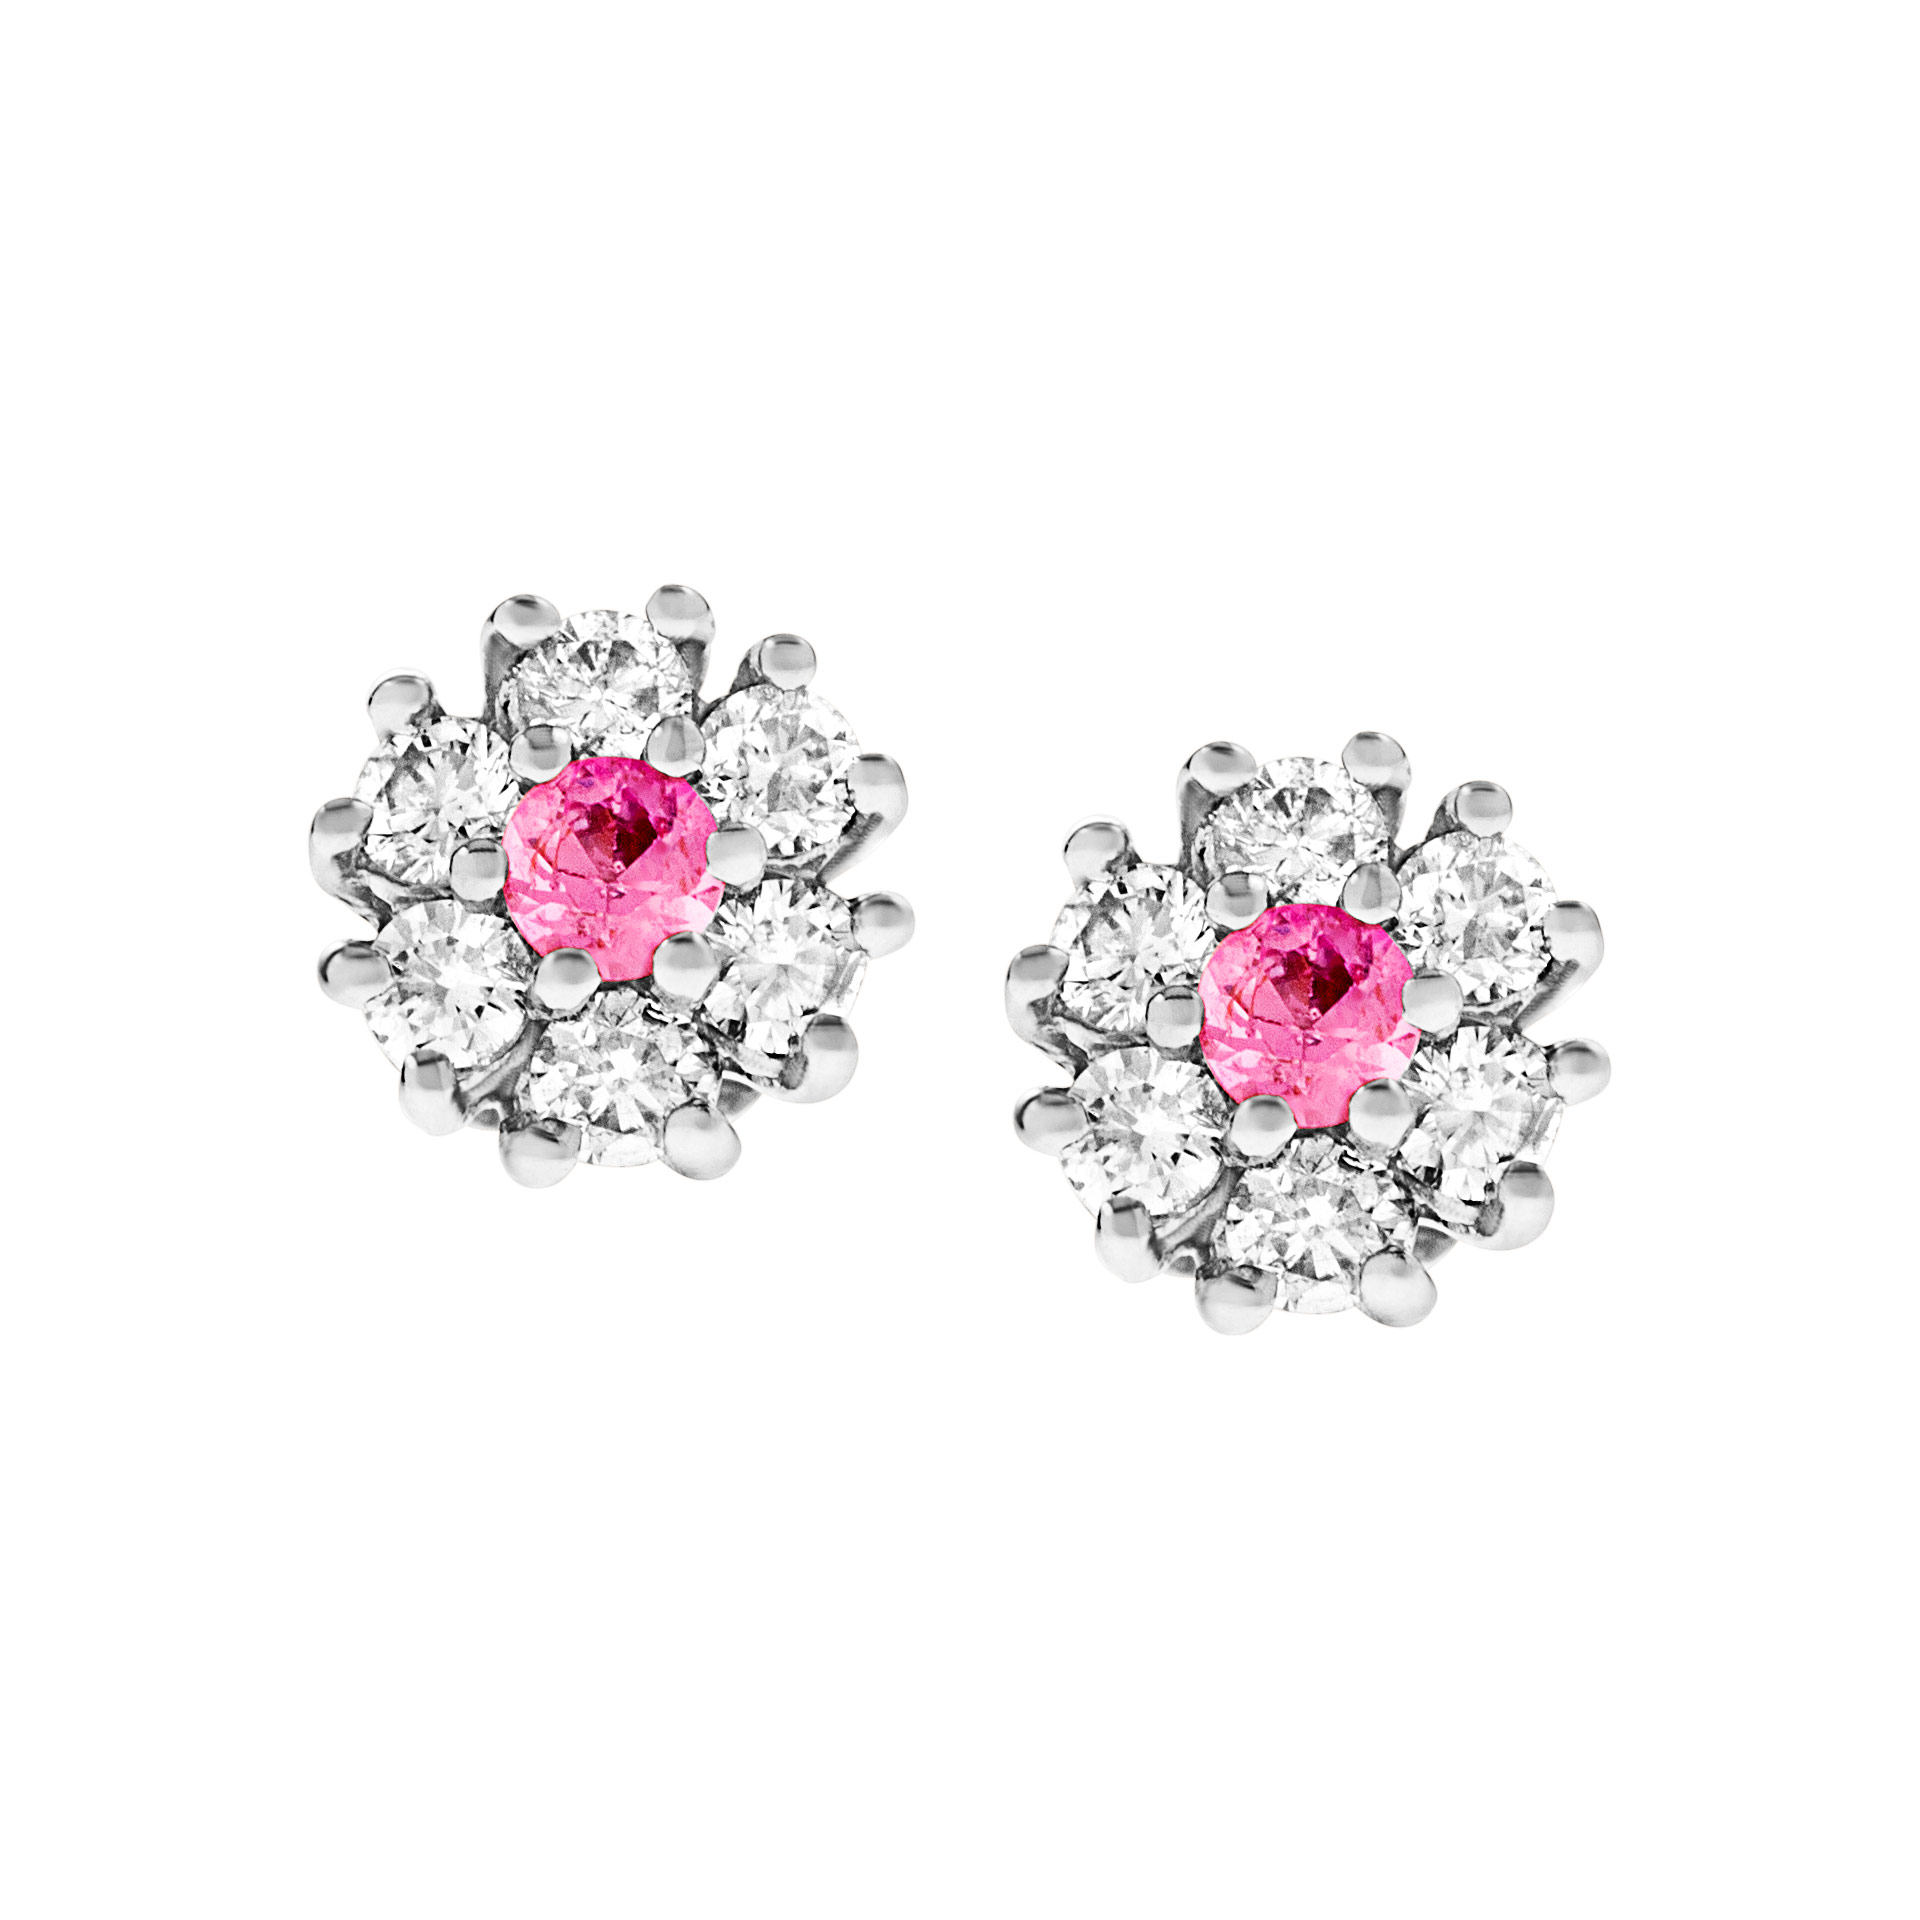 Flower pink sapphire & diamond earrings in 18k white gold. 0.48 cts in diamonds. image 1